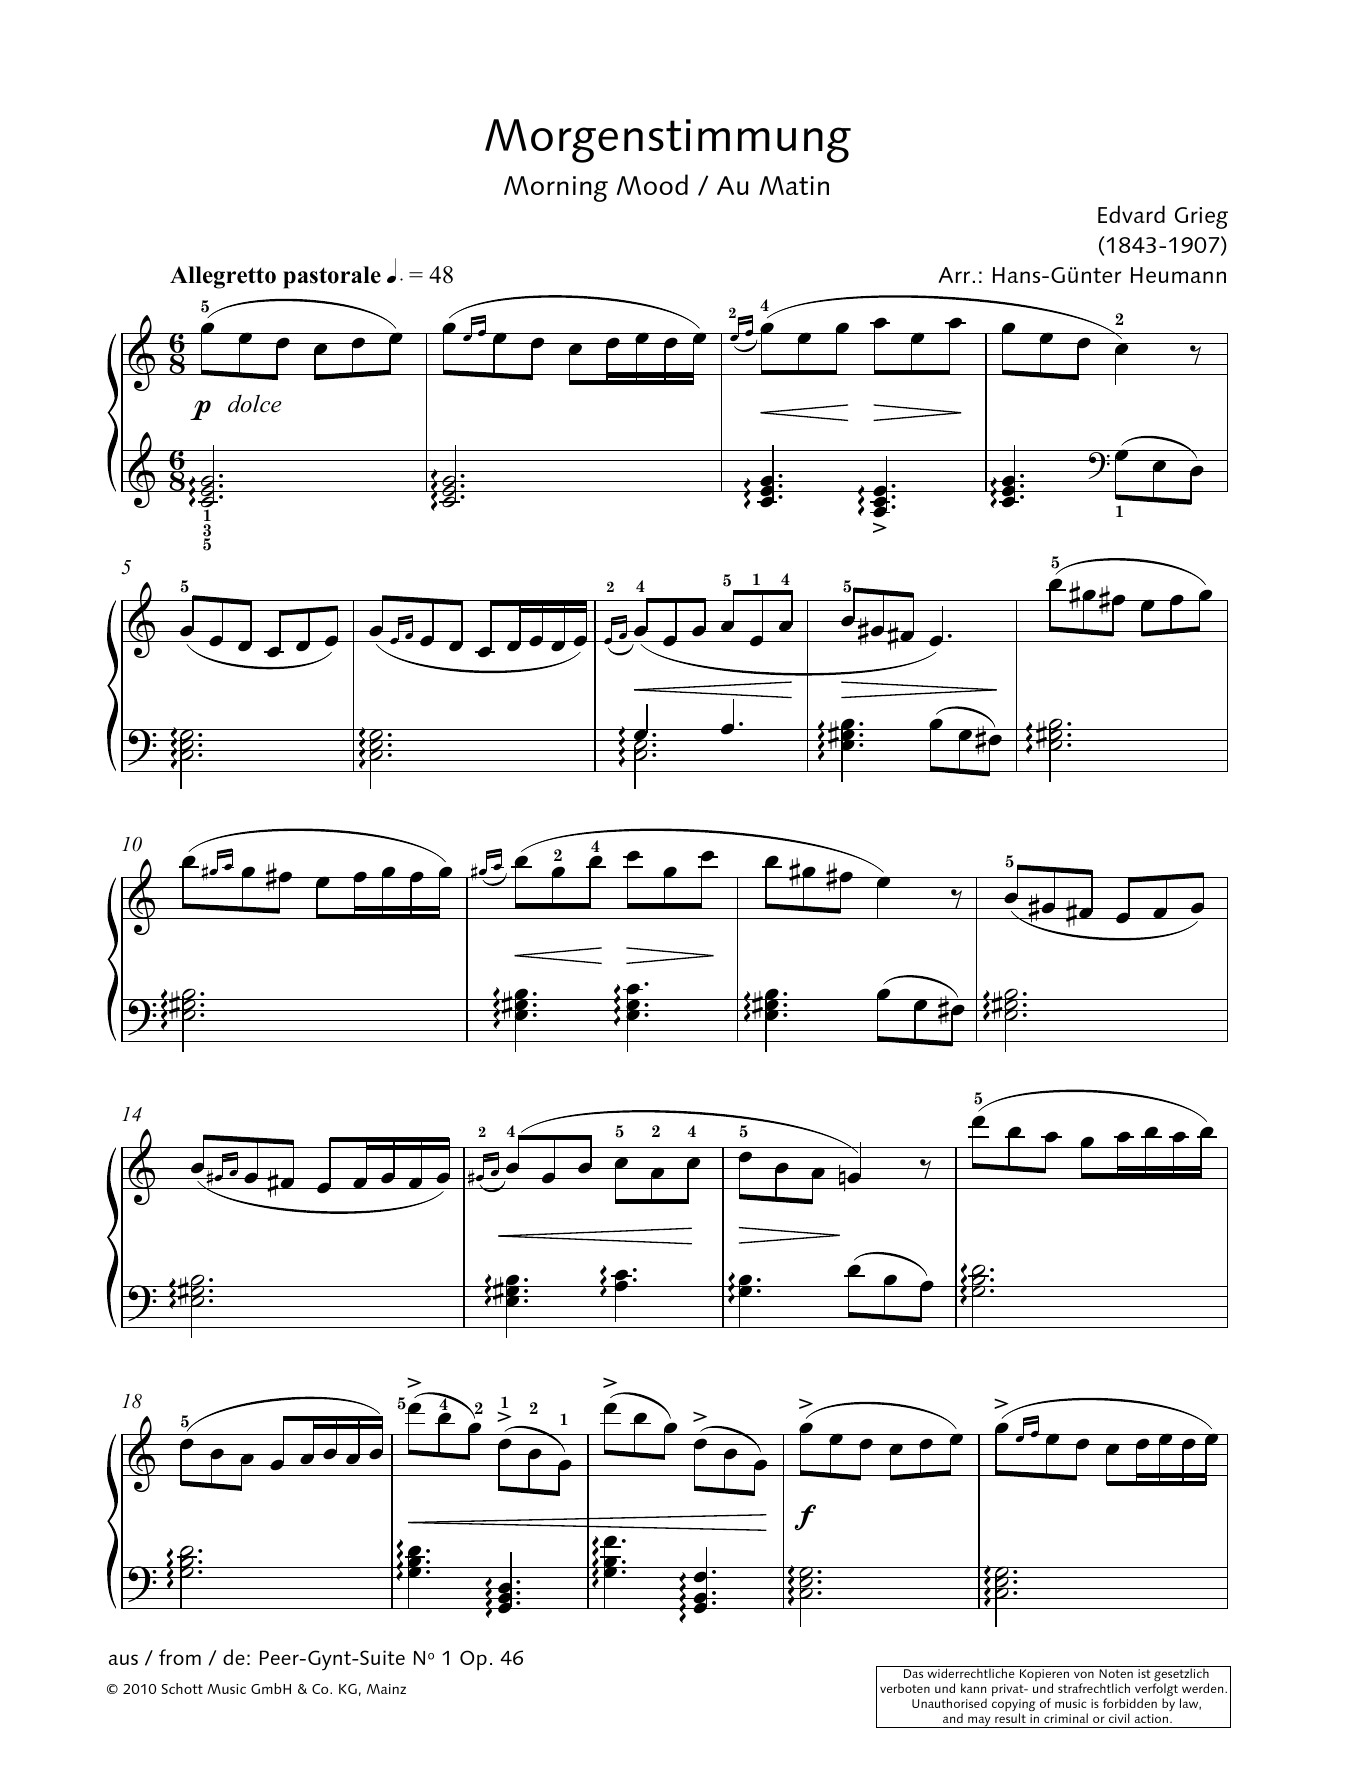 Hans-Gunter Heumann Morning Mood Sheet Music Notes & Chords for Piano Solo - Download or Print PDF